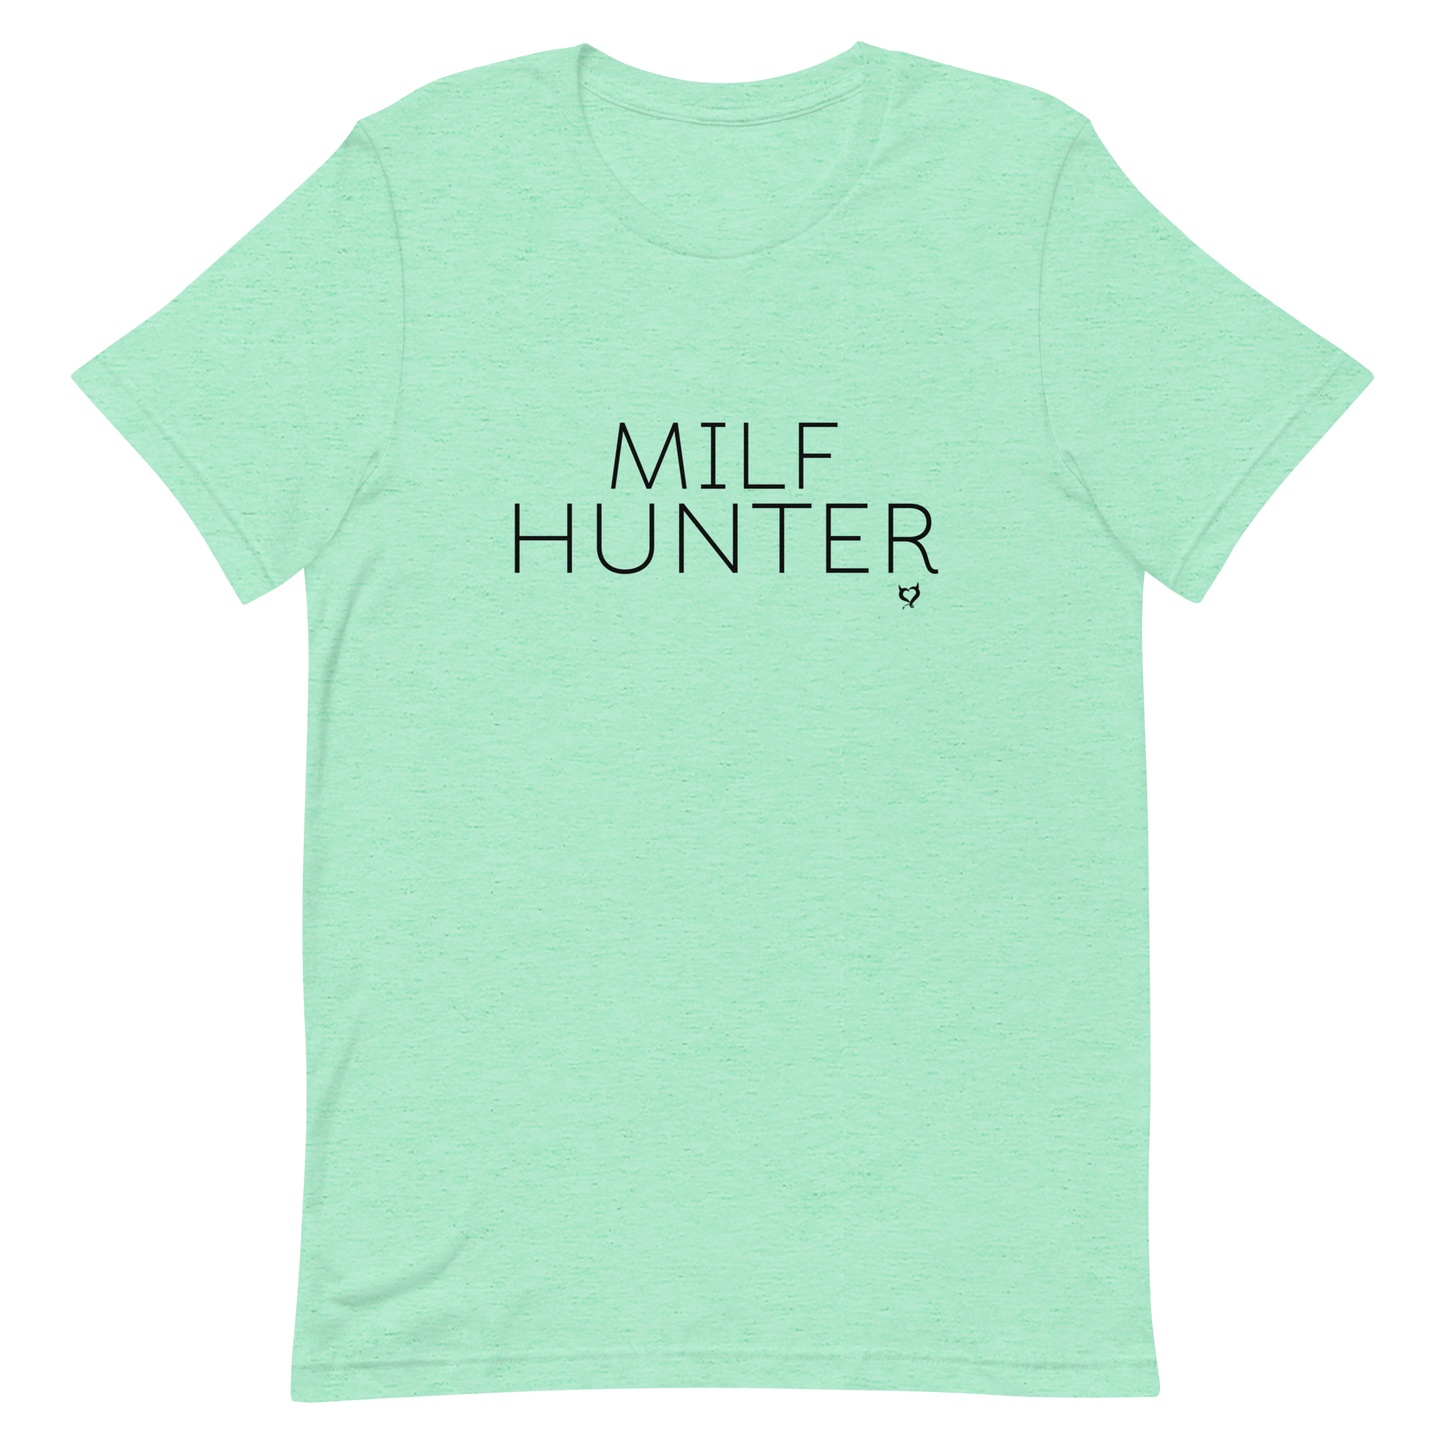 MILF HUNTER Unisex T-Shirt